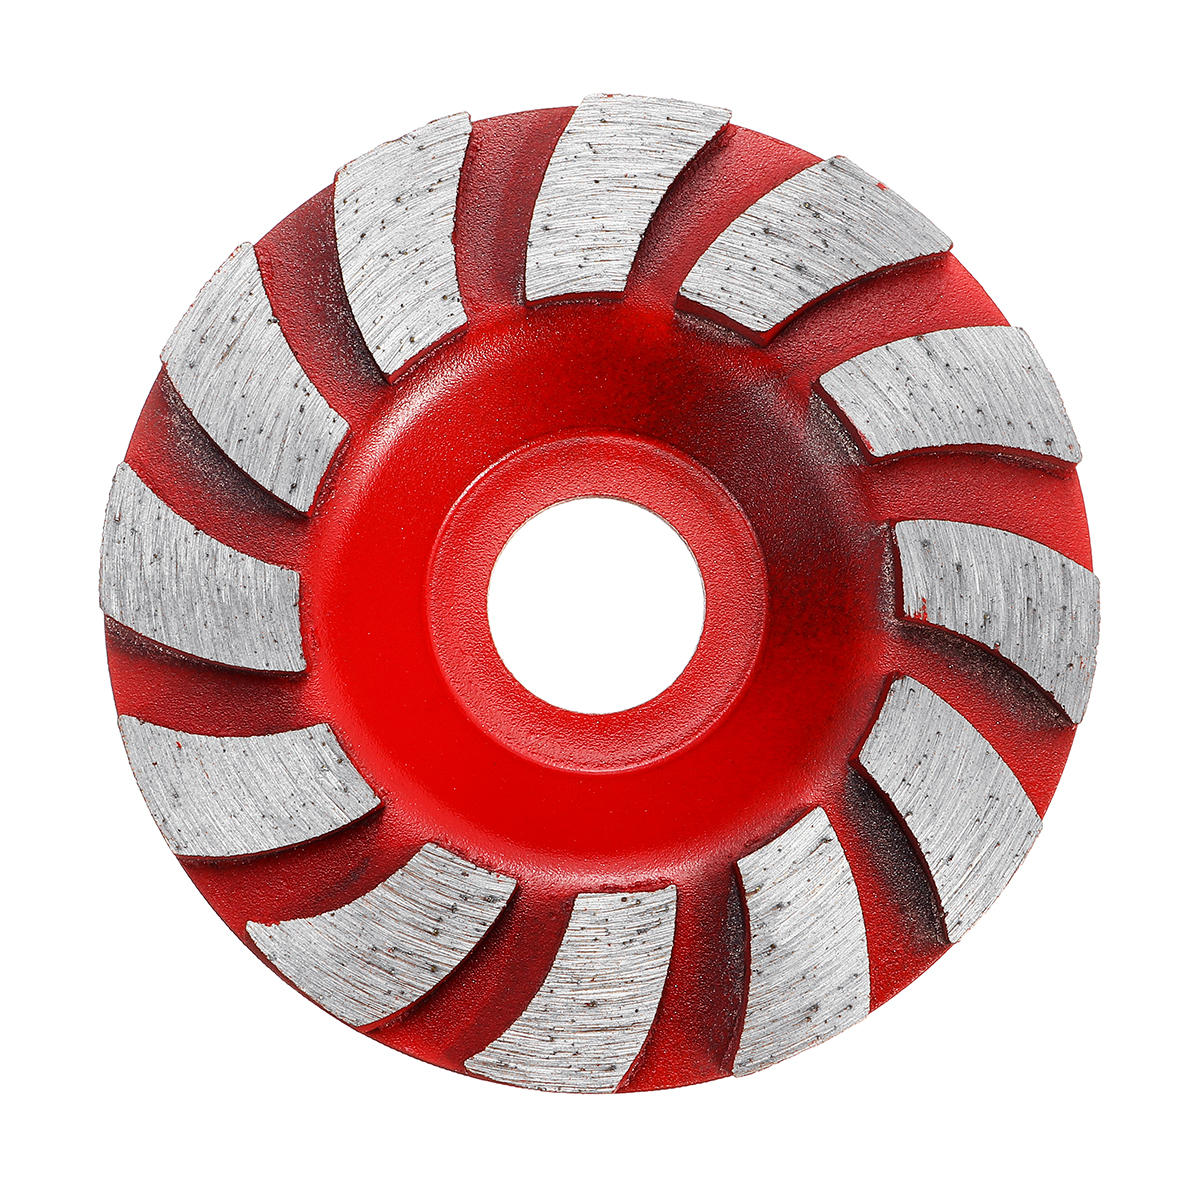 Алмазный круг красный. Красный абразивный камень. Круг 90 мм. Red Diamond grinding Wheel.